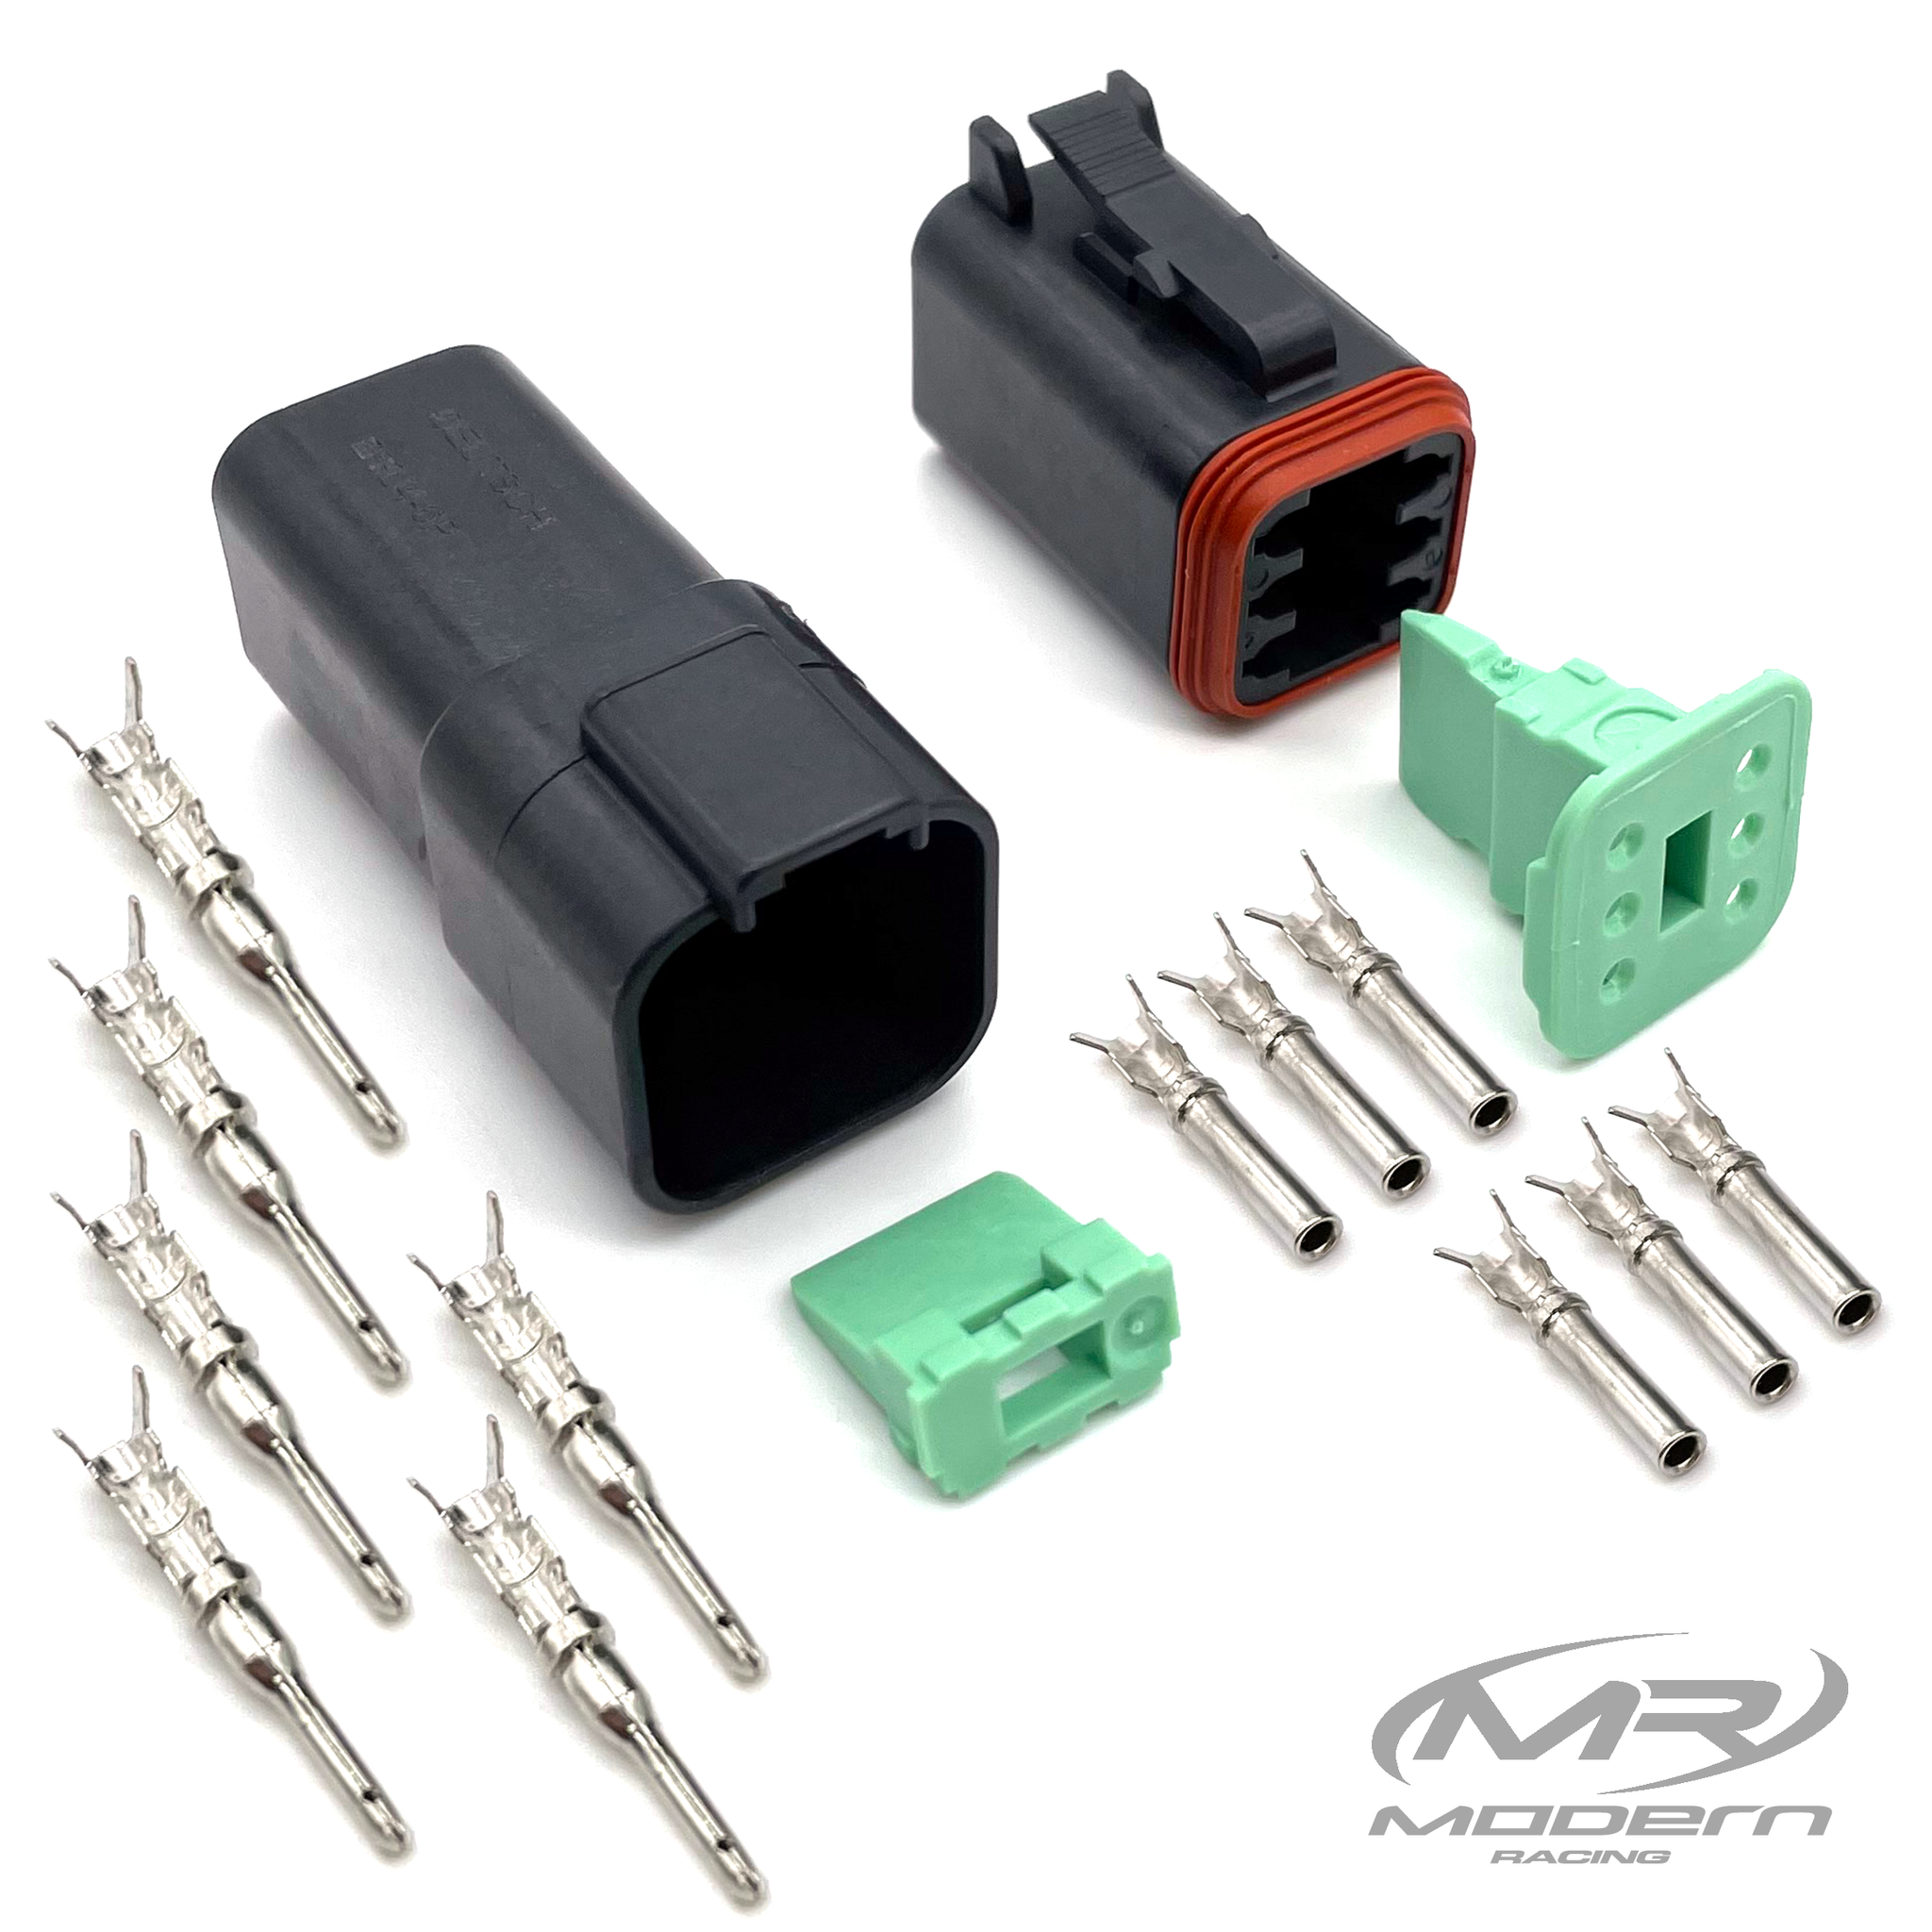 Deutsch DT 6 Socket/Pin Mating Pair Connector Kit (Black)